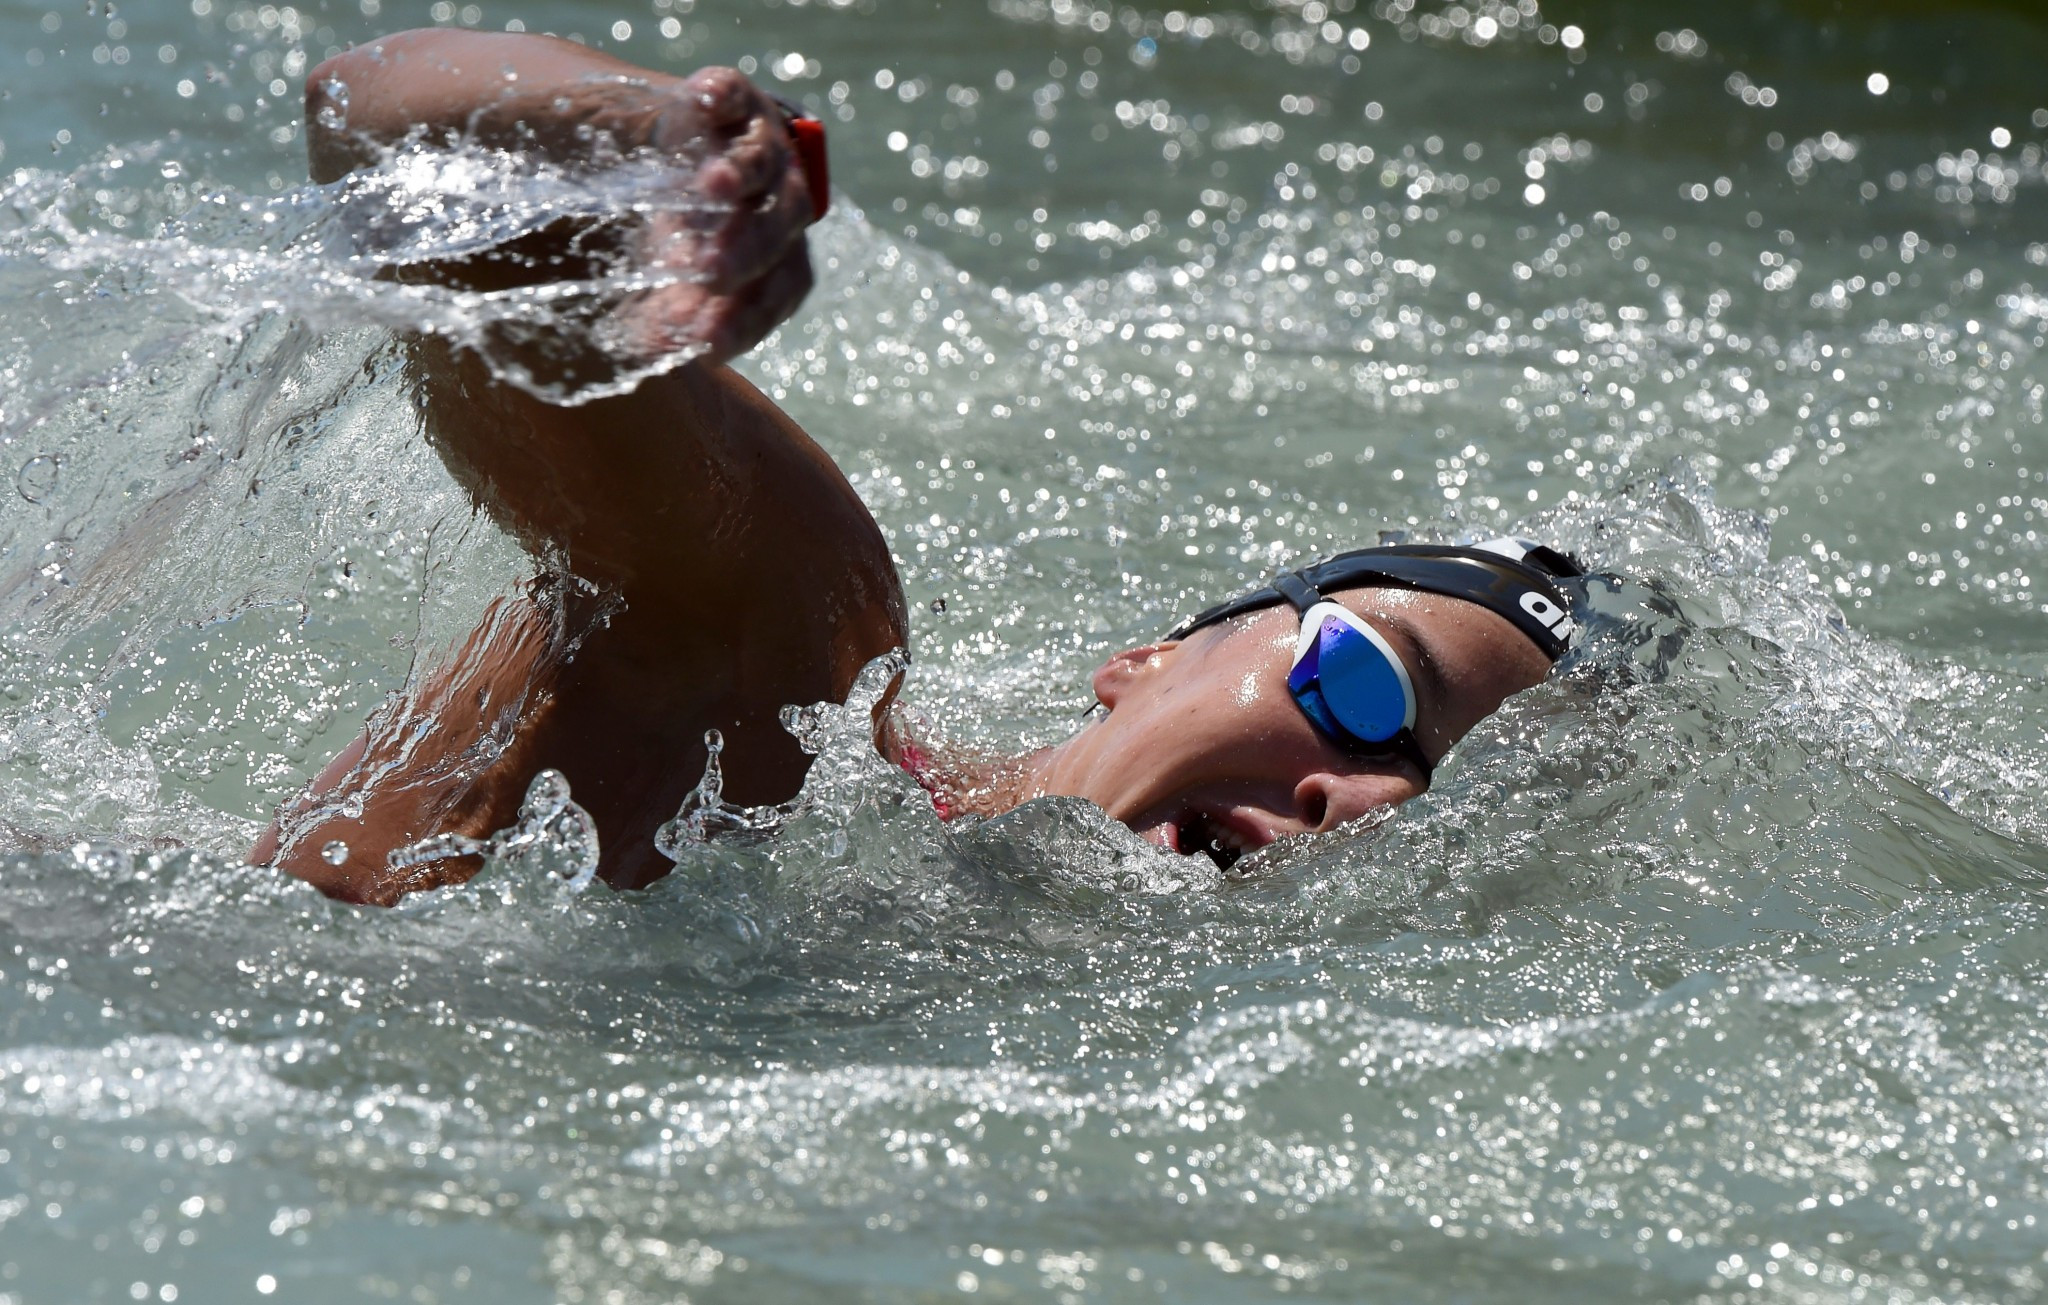 Italy's Arianna Bridi won last year’s Marathon Swimming World Cup at Lac-Mégantic ©Getty Images